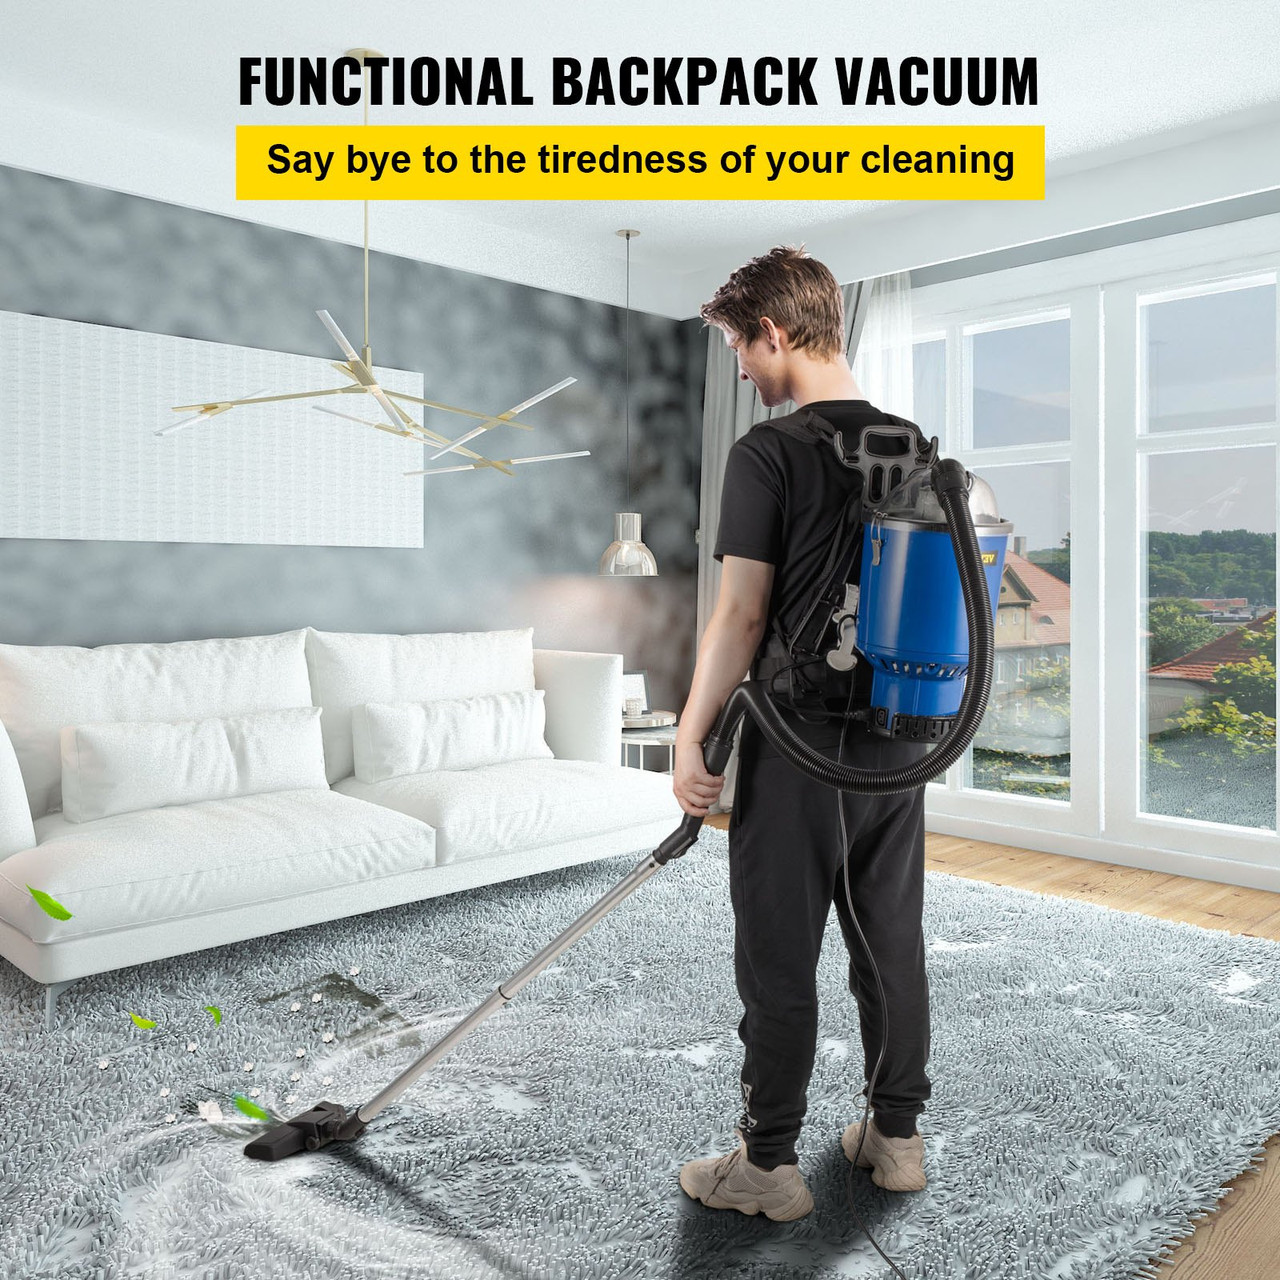 Backpack Vacuum, 3.6qt Backpack Vacuum Cleaner, 5-IN-1 Lightweight Backpack Vacuum, HEPA Filtration Vacuum Backpack, Commercial Industrial Backpack Vacuum with Telescoping Wand, Tool Kit, Corded